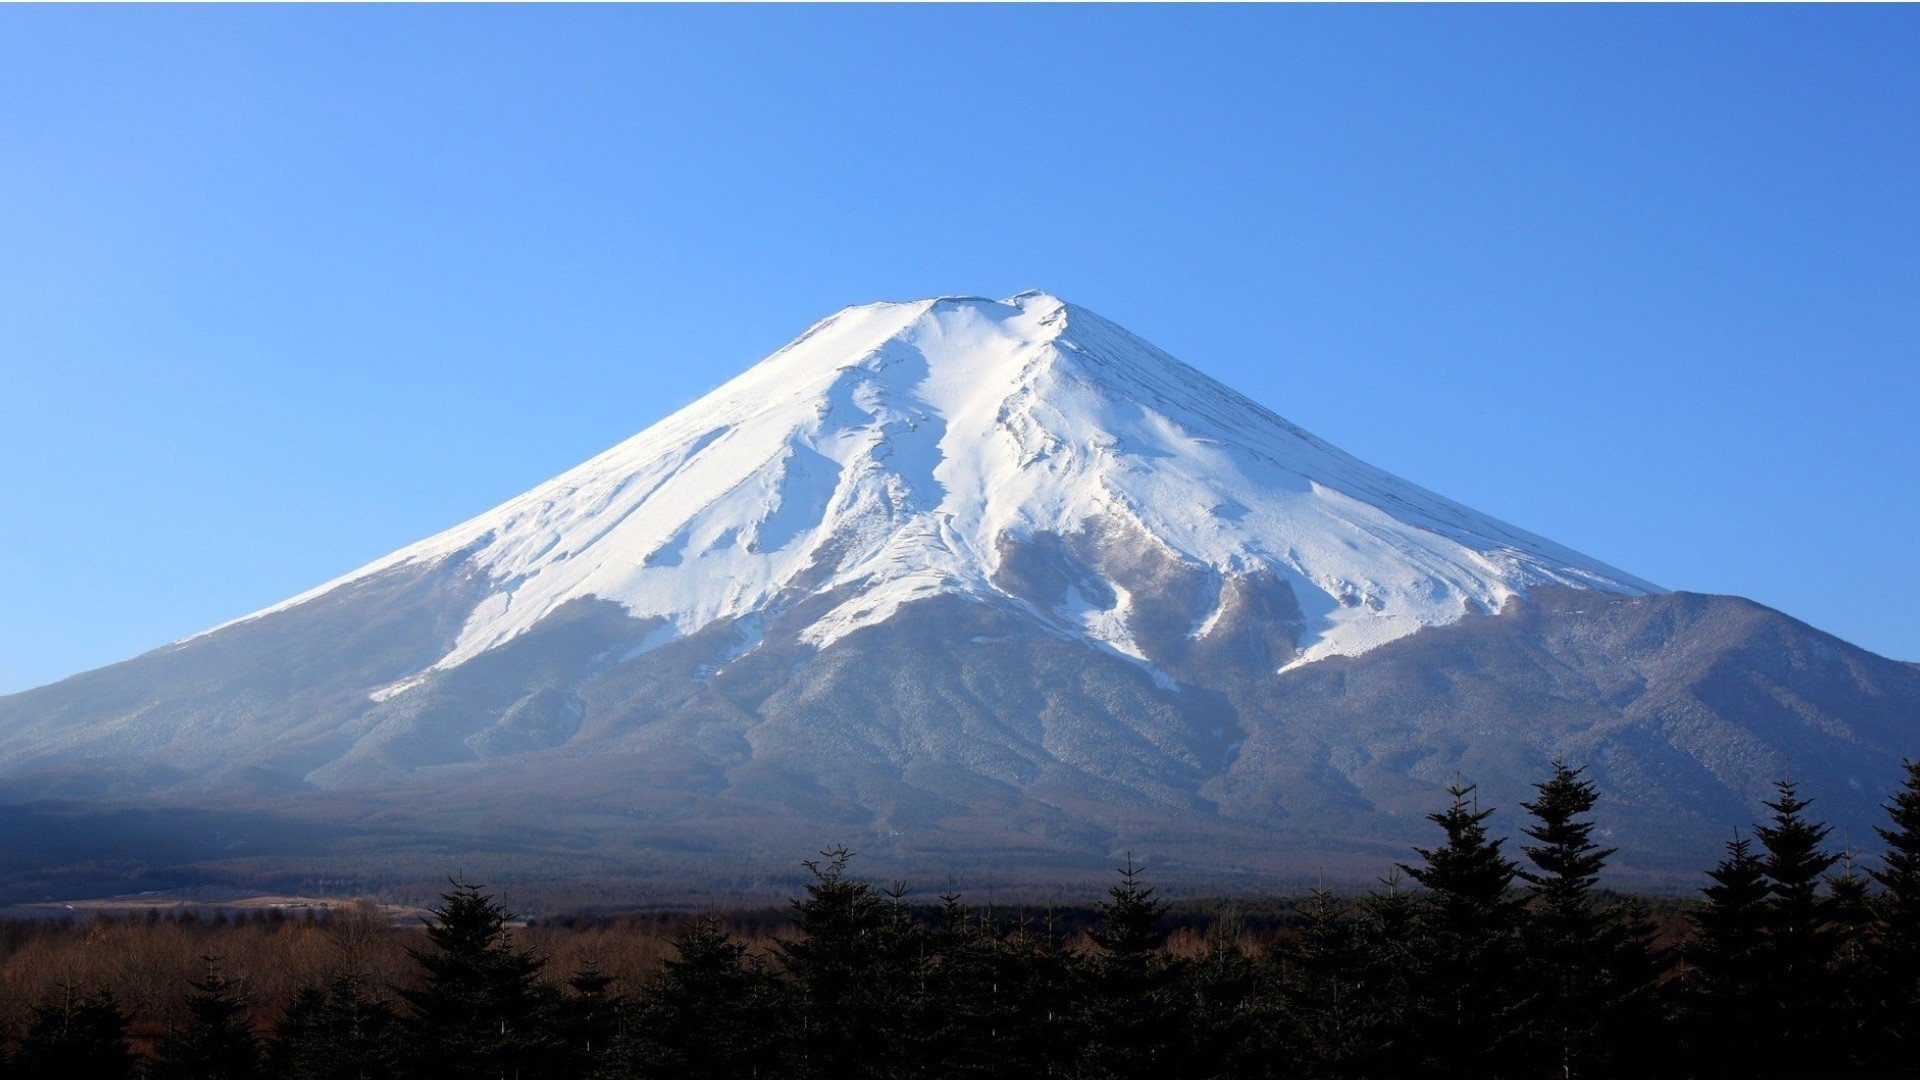 Download full hd 1080p Mount Fuji desktop background ID:277777 for free